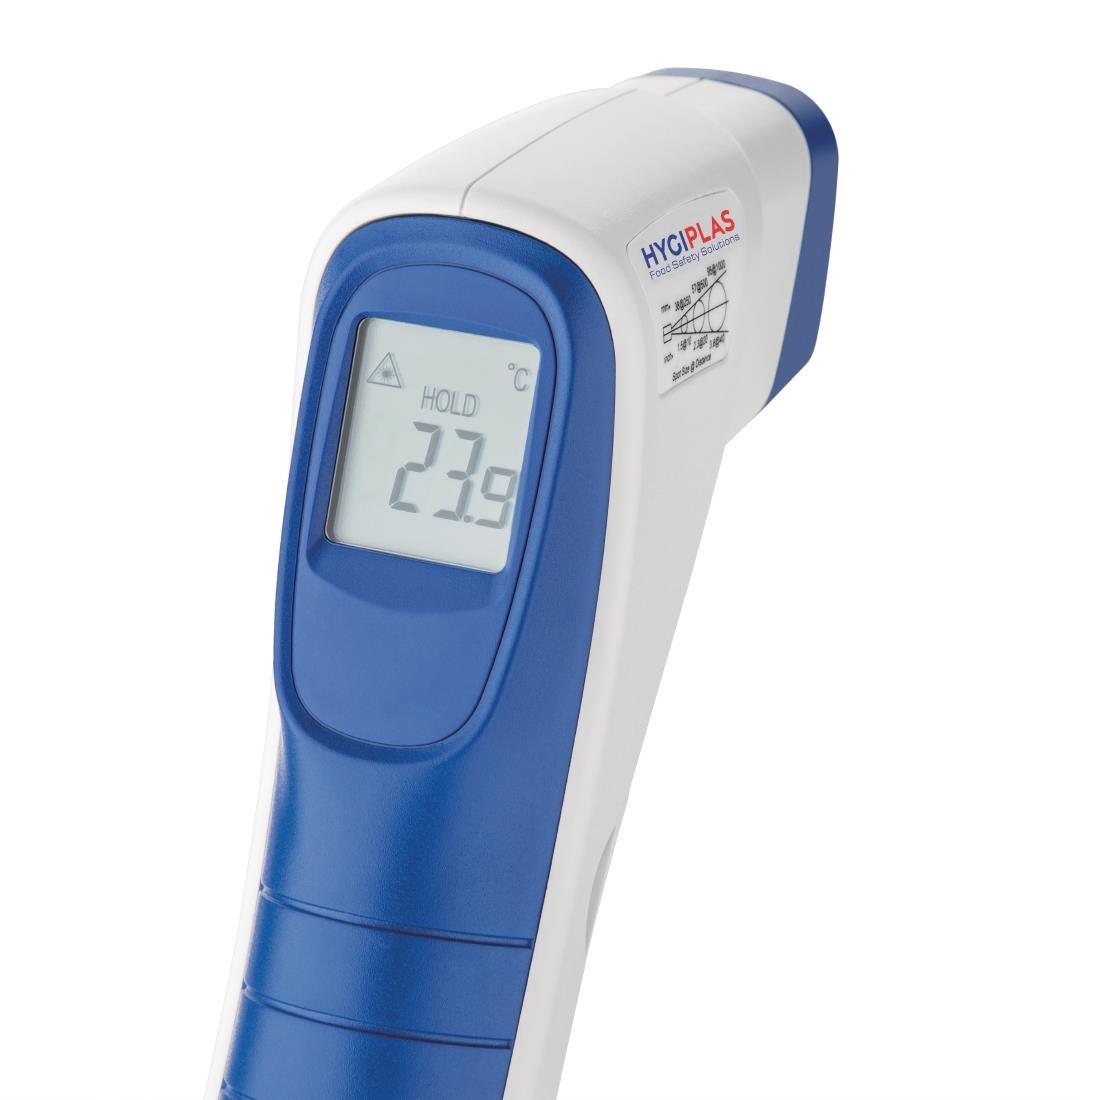 GG749 - ST656 - Hygiplas Infrared Thermometer - GG749